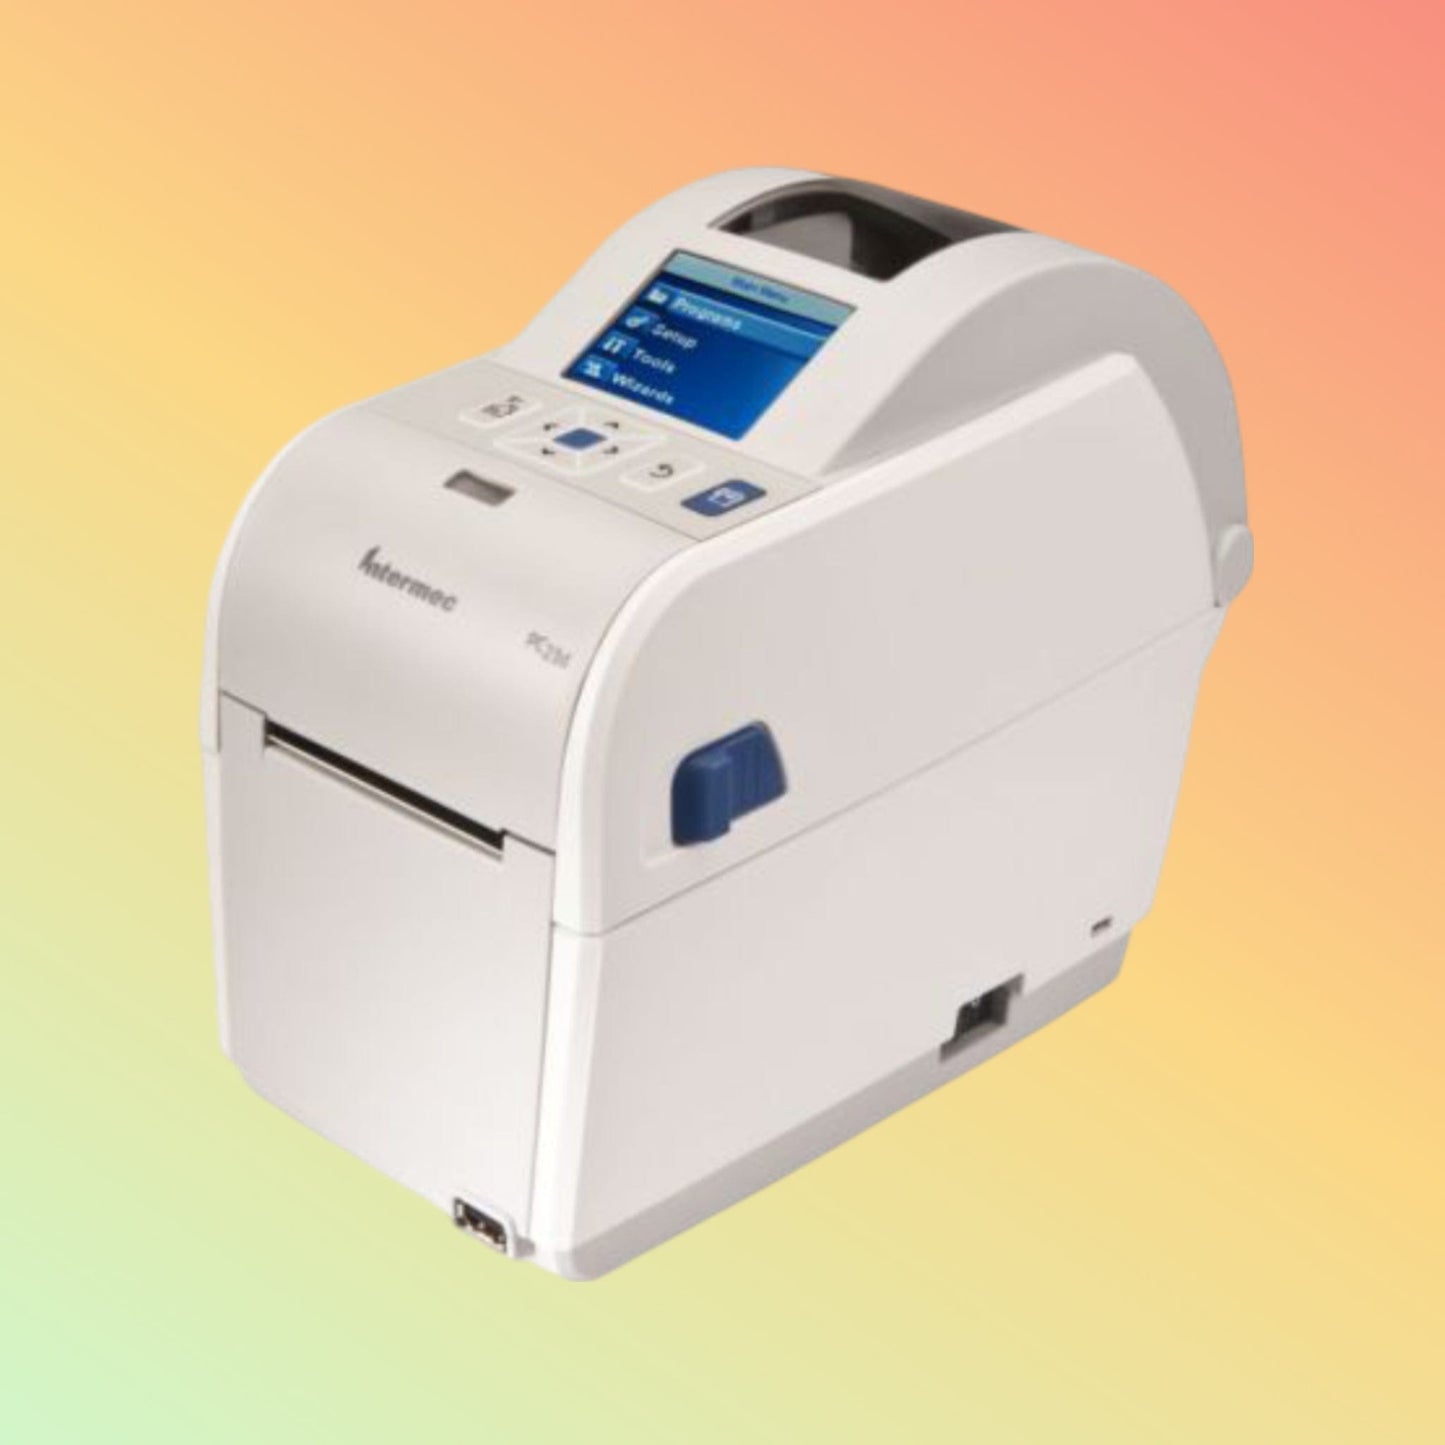 Honeywell PC23D Desktop Direct Thermal Barcode Printer - Neotech